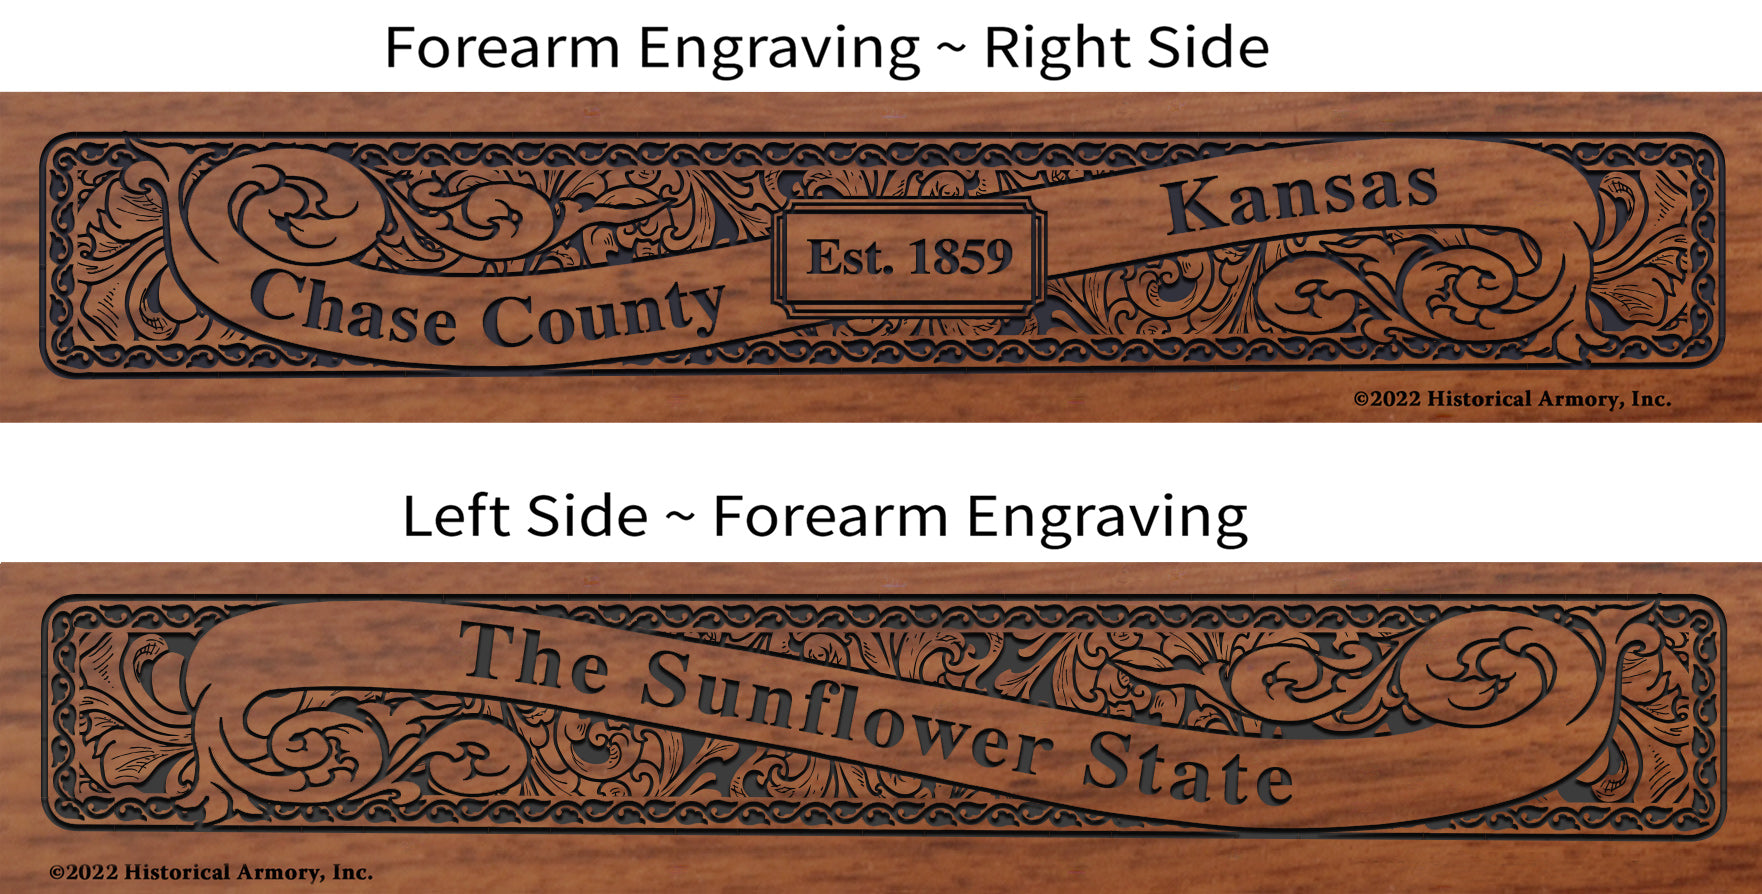 Chase County Kansas Engraved Rifle Forearm